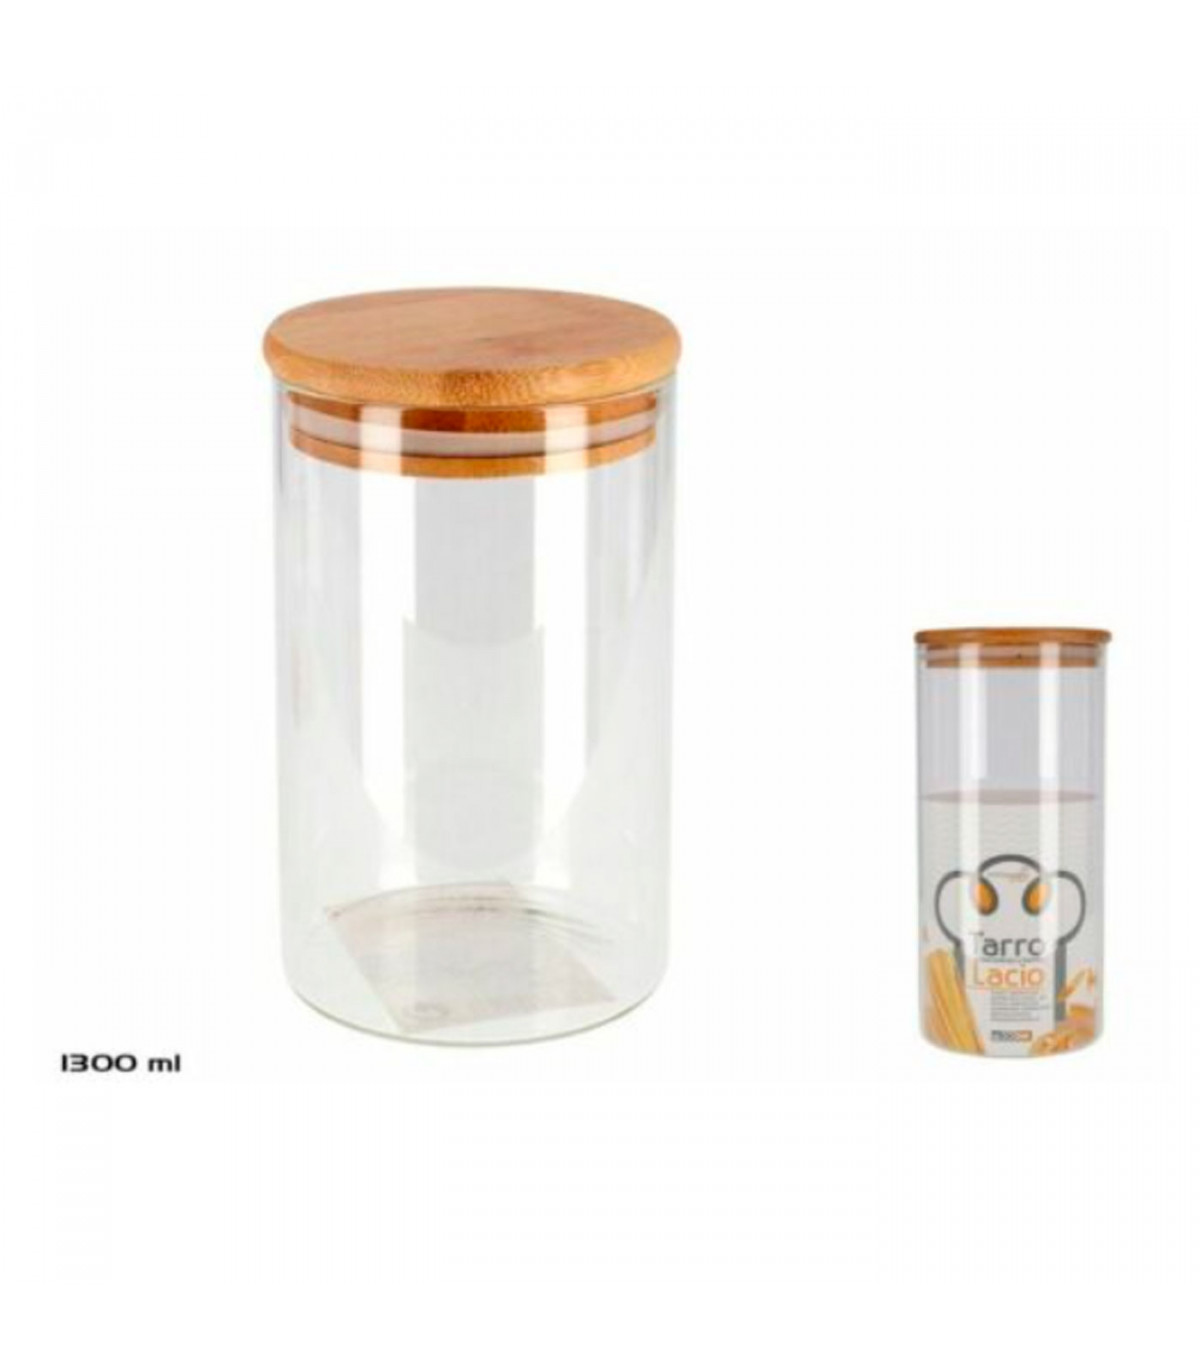 Bote de cristal borosilicato con tapa de de bambú, recipiente, tarro de almacenamiento café, galletas, legumbres, especia